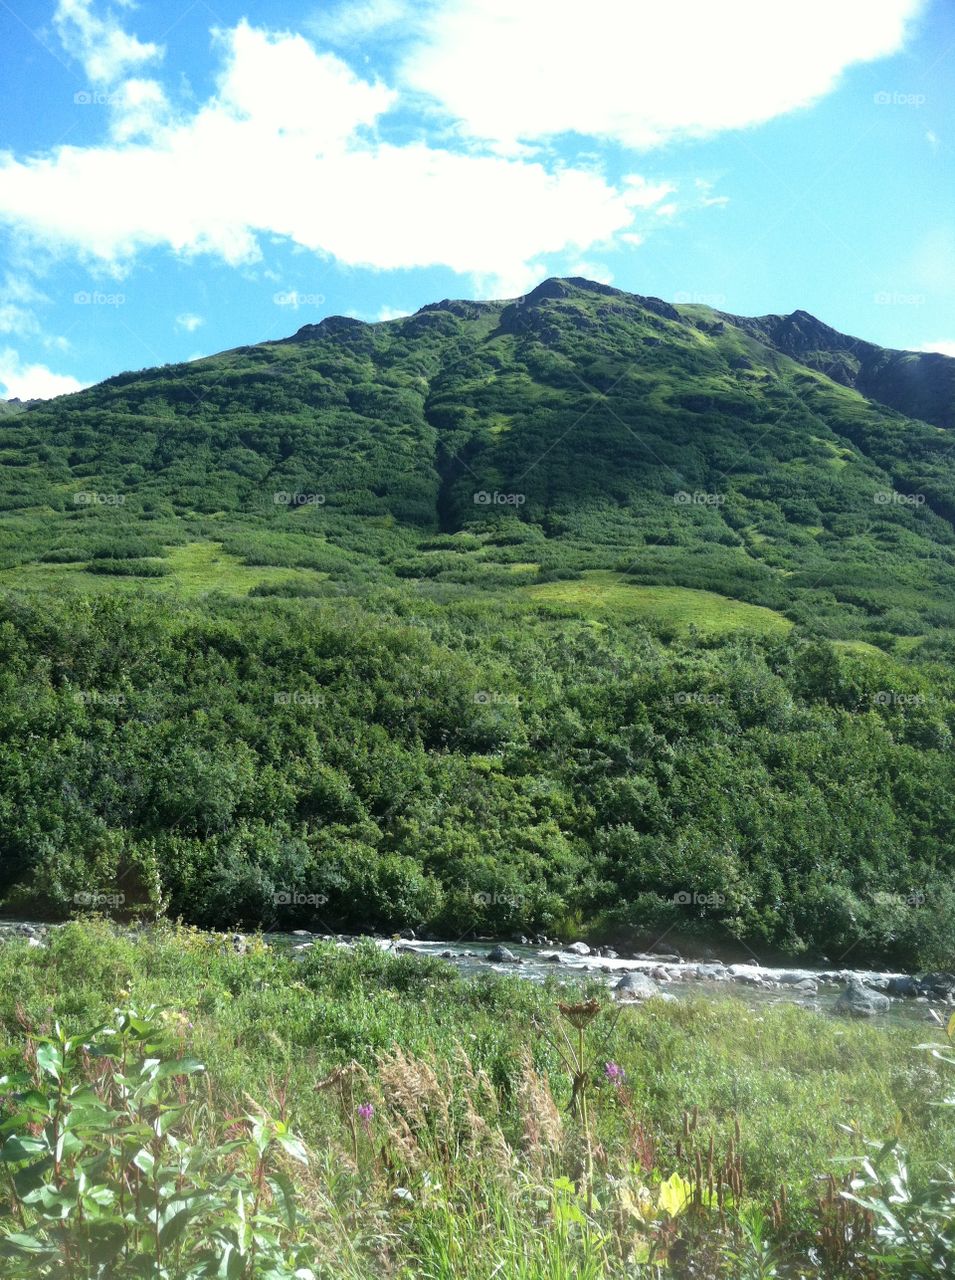 Grassy Mountain in Alaska